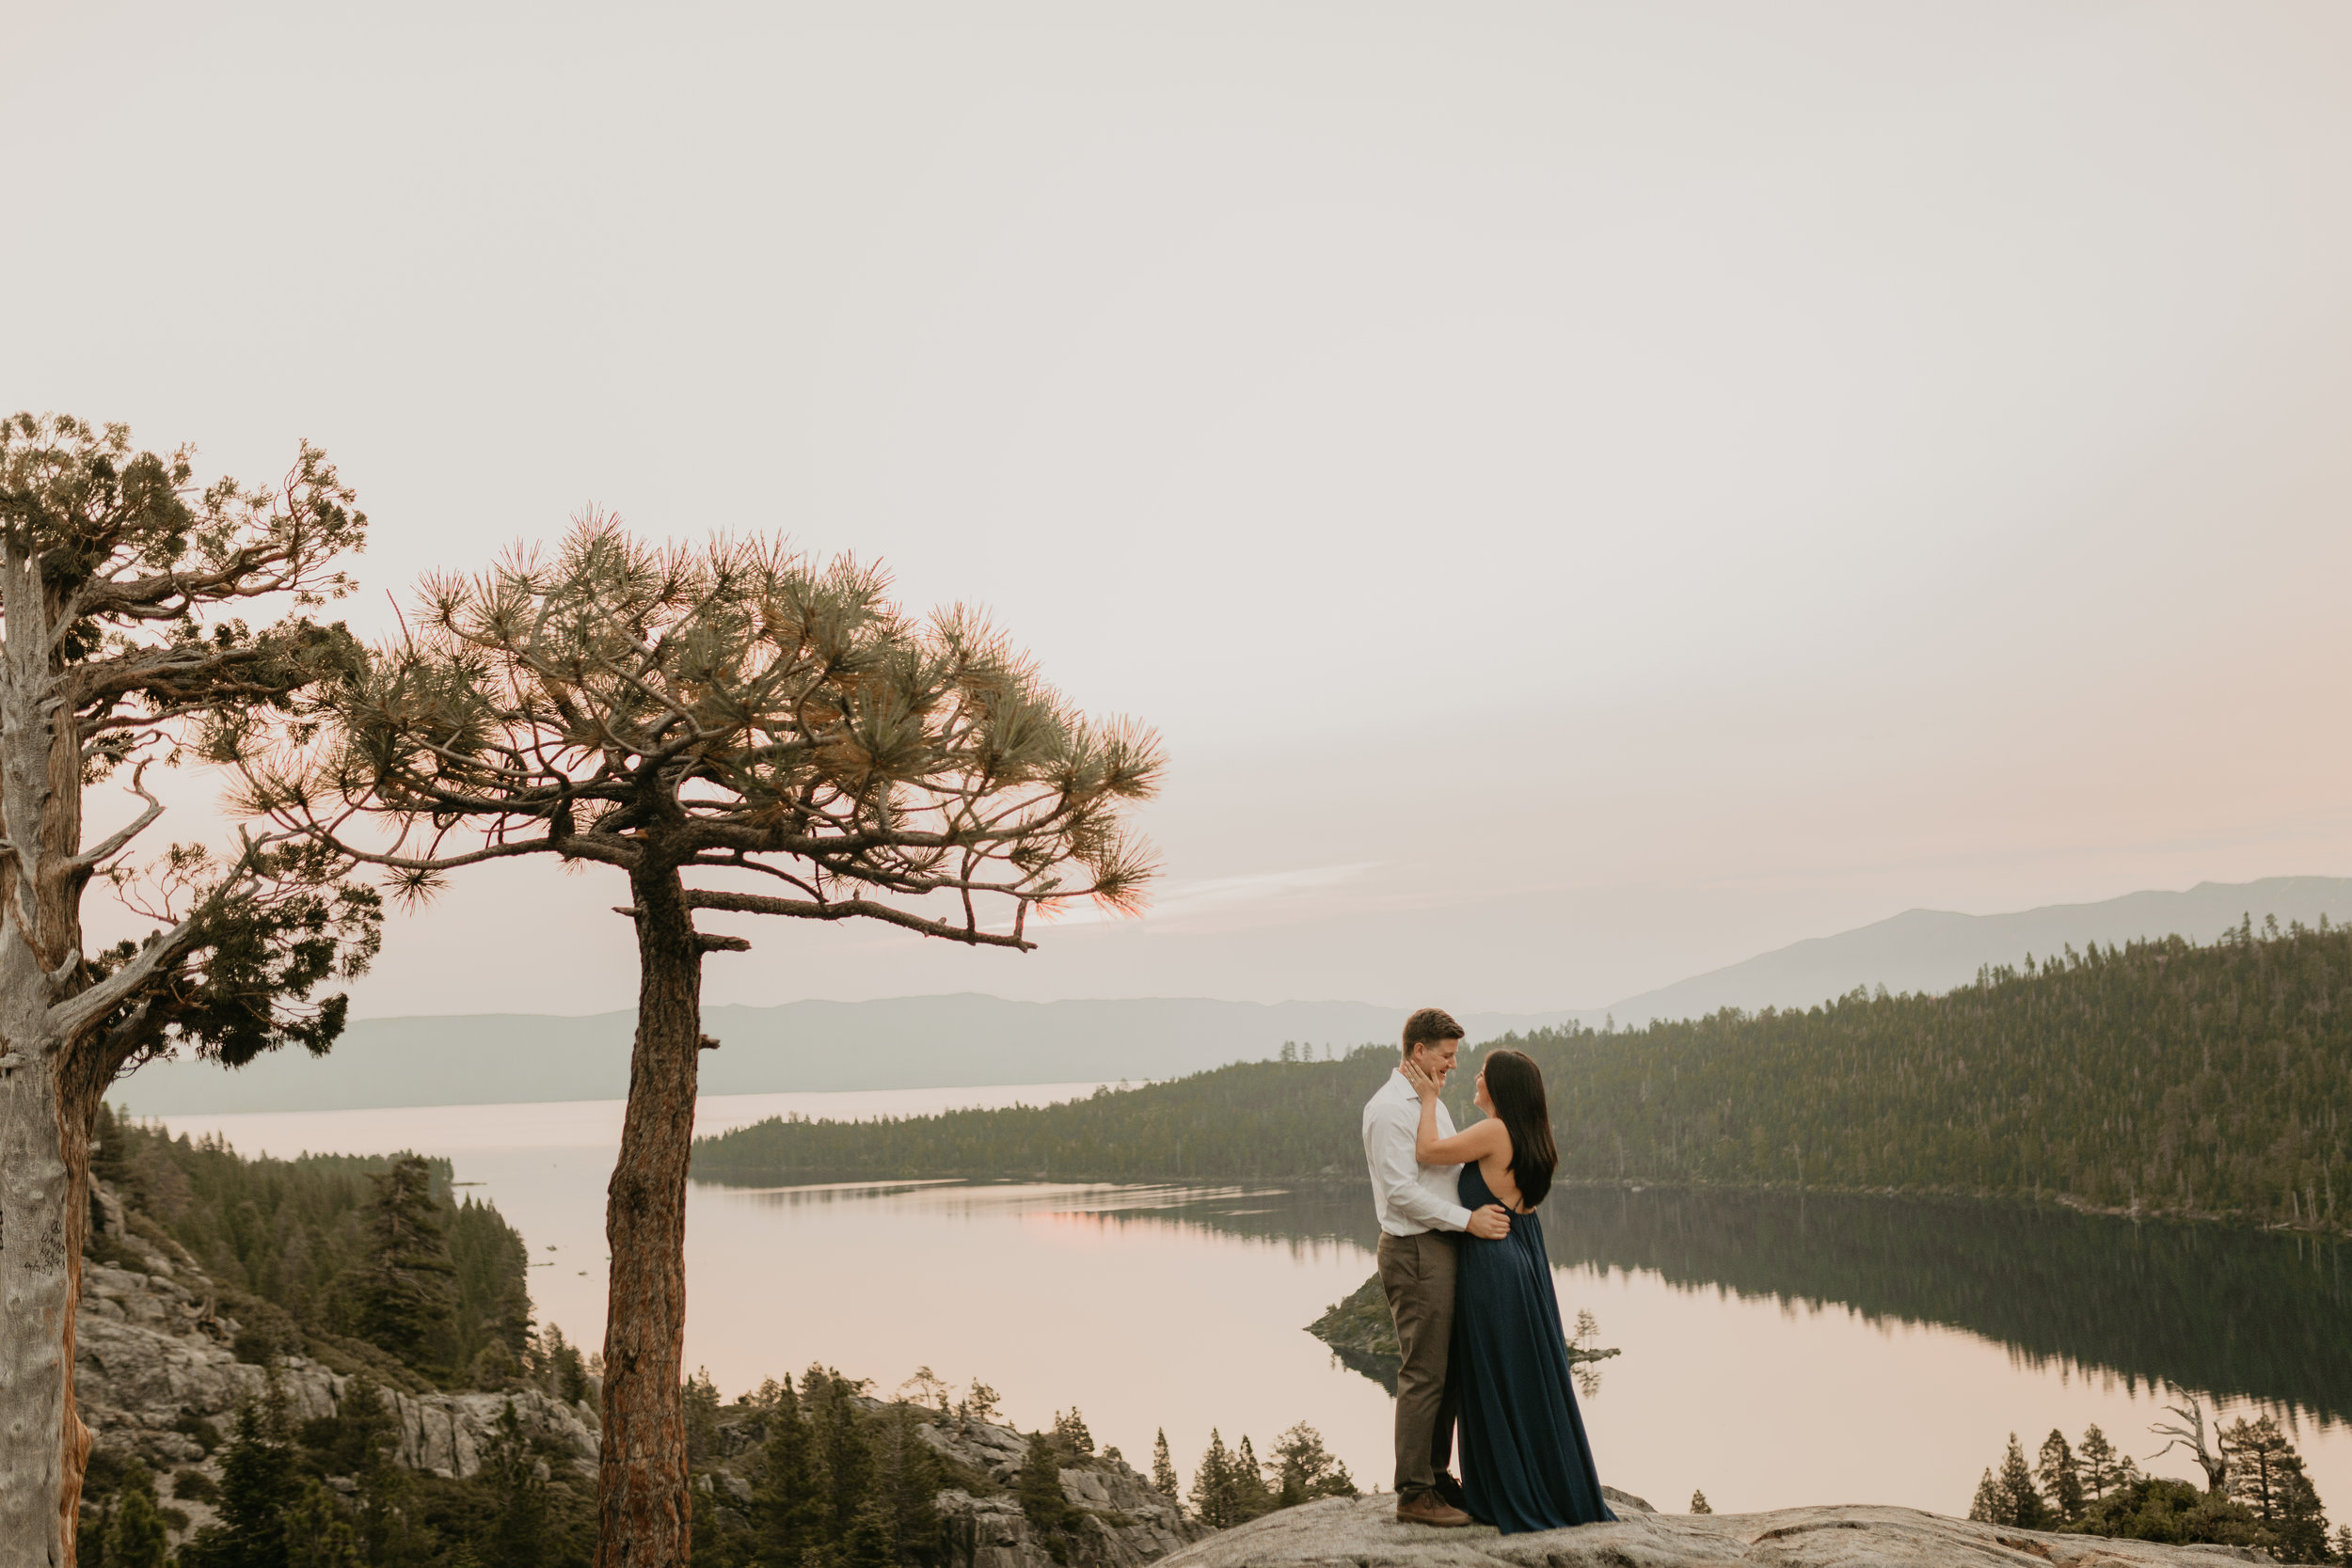 nicole-daacke-photography-lake-tahoe-sunrise-summer-adventure-engagement-photos-nevada-wedding-elopement-photographer-golden-emerald-bay-light-pine-trees-summer-vibe-fun-carefree-authentic-love-2.jpg